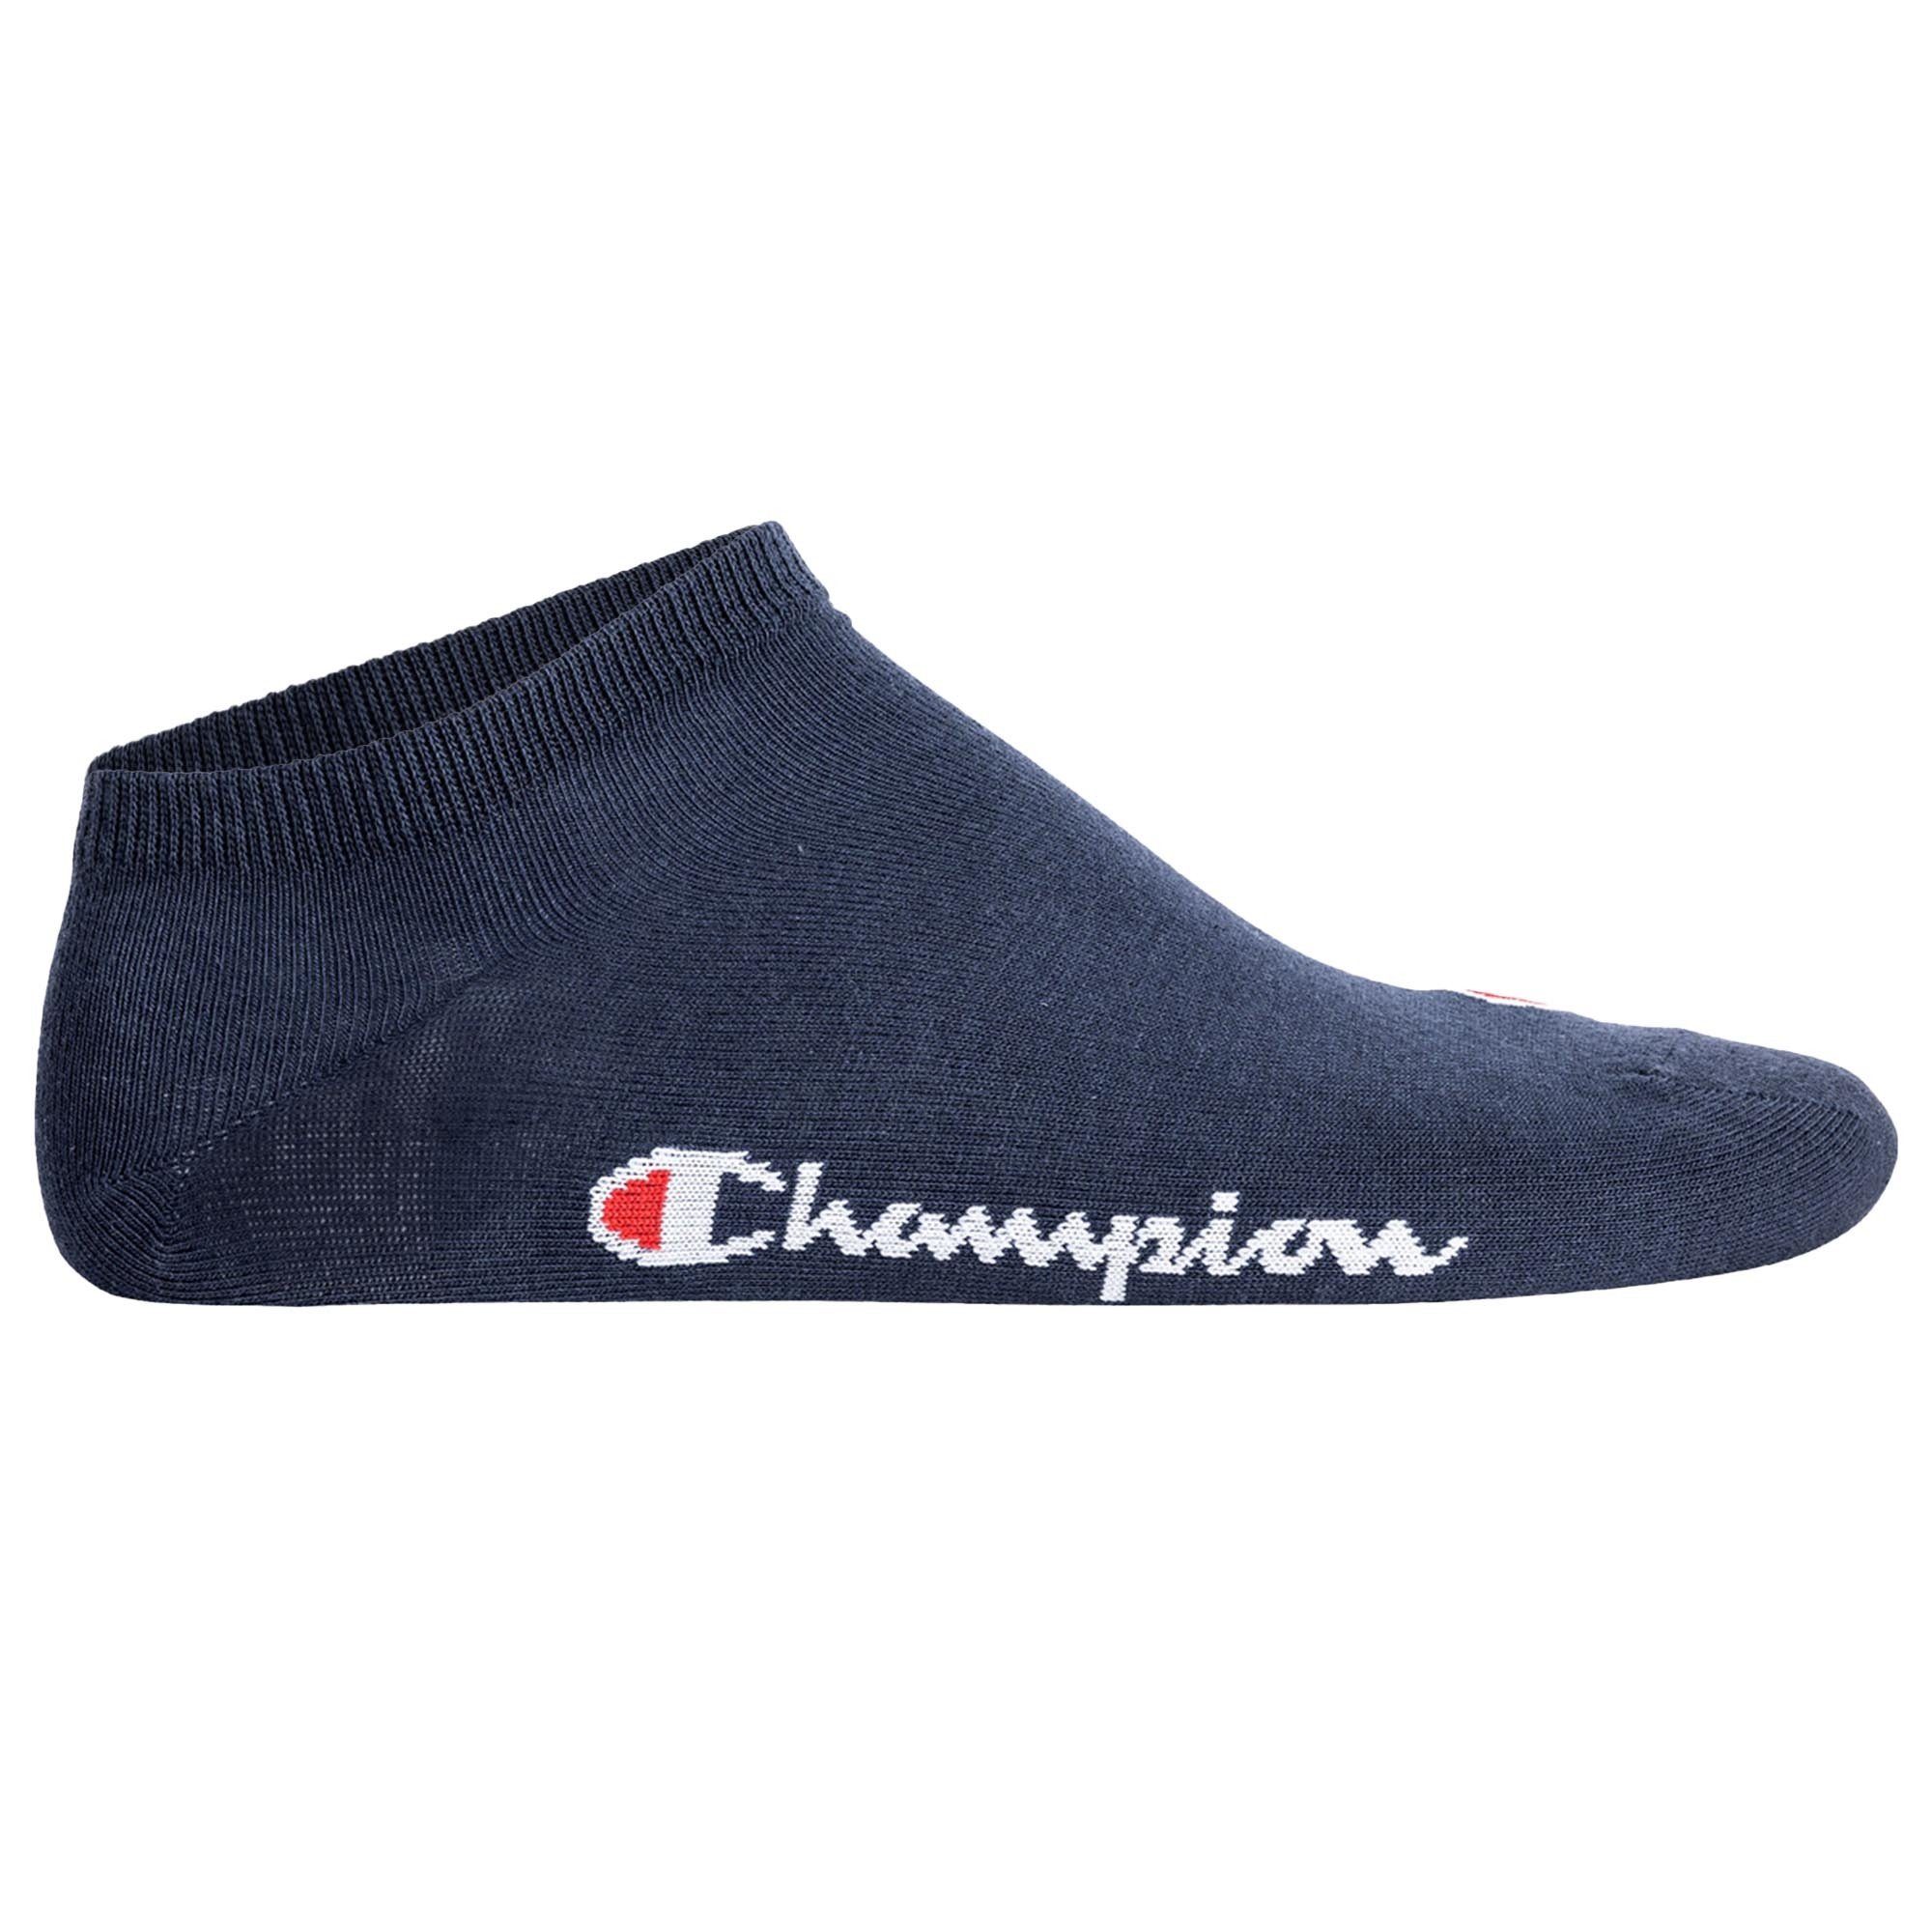 - Sneaker Socken, 3er Unisex Sportsocken Pack Rosa/Weiß/Blau Champion Socken Sneaker